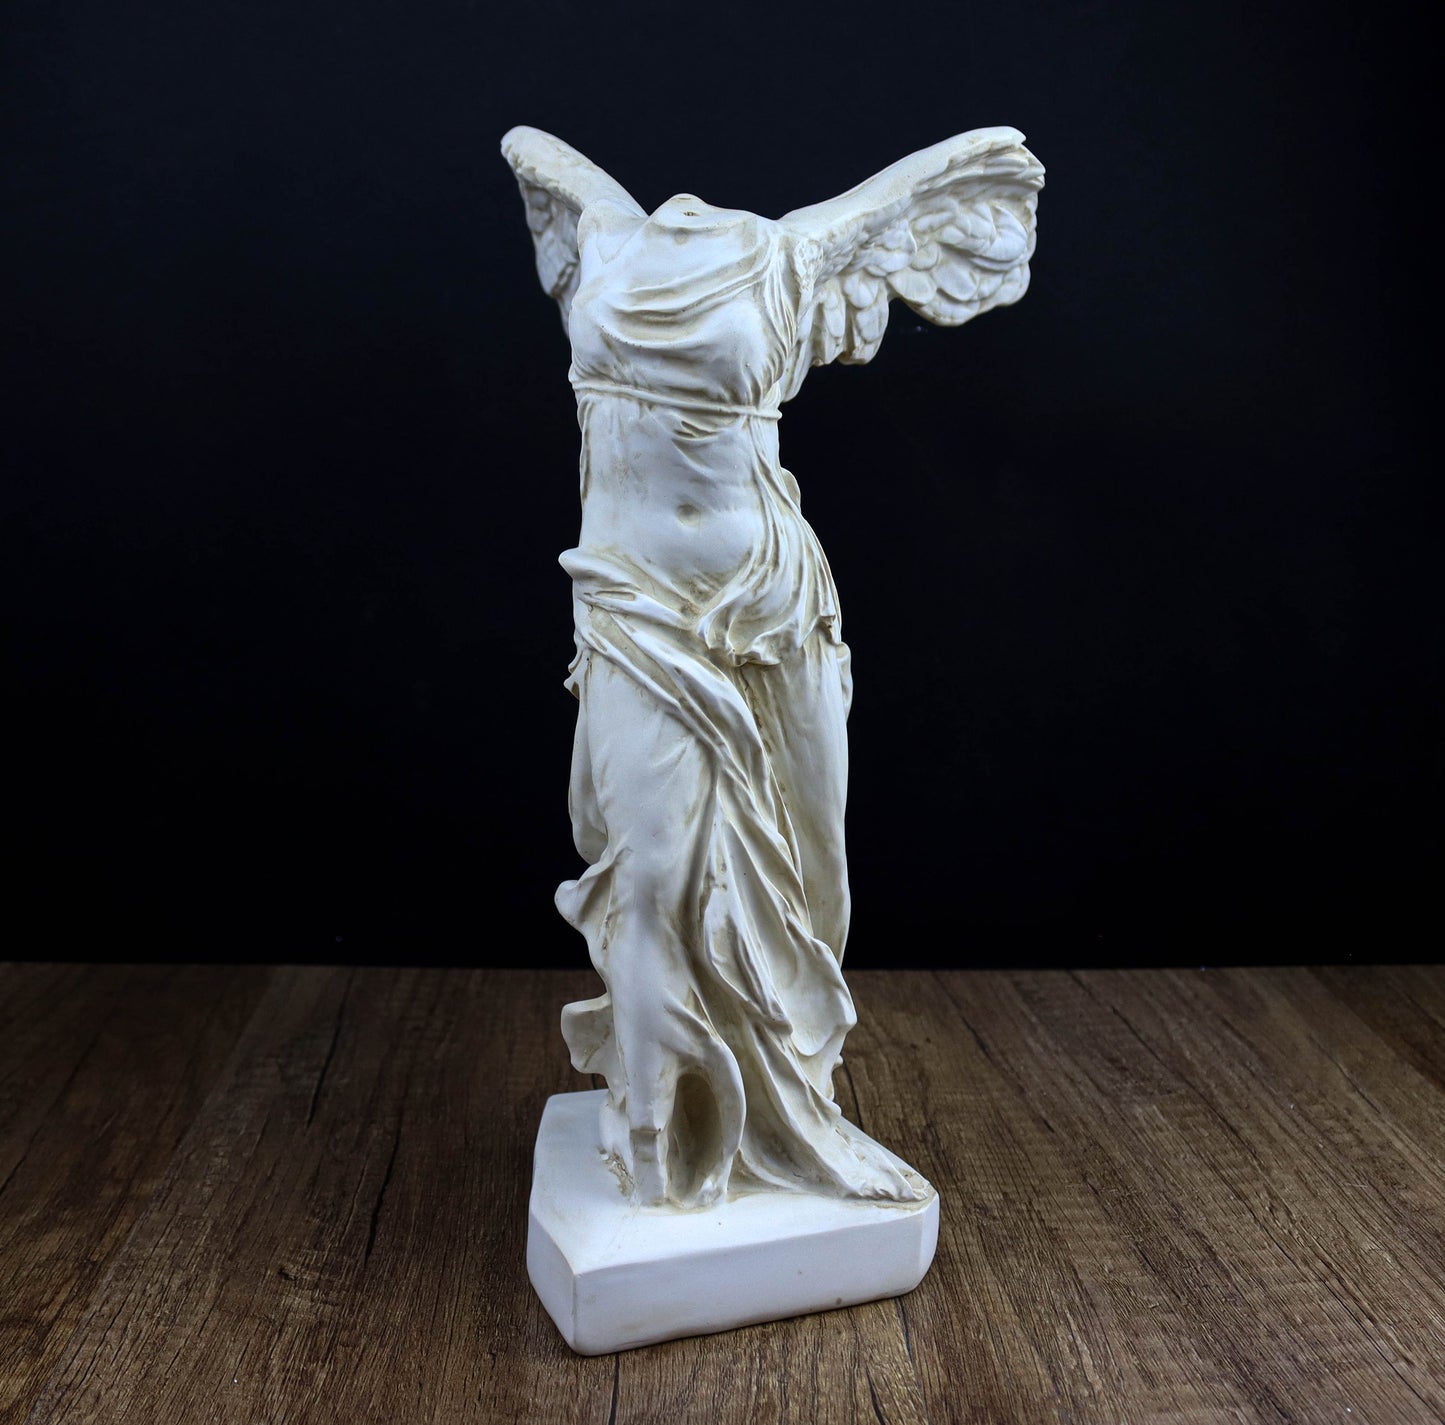 Winged Victory of Samothrace 30cm (11.8") Statue, Nike of Samothrace sculpture